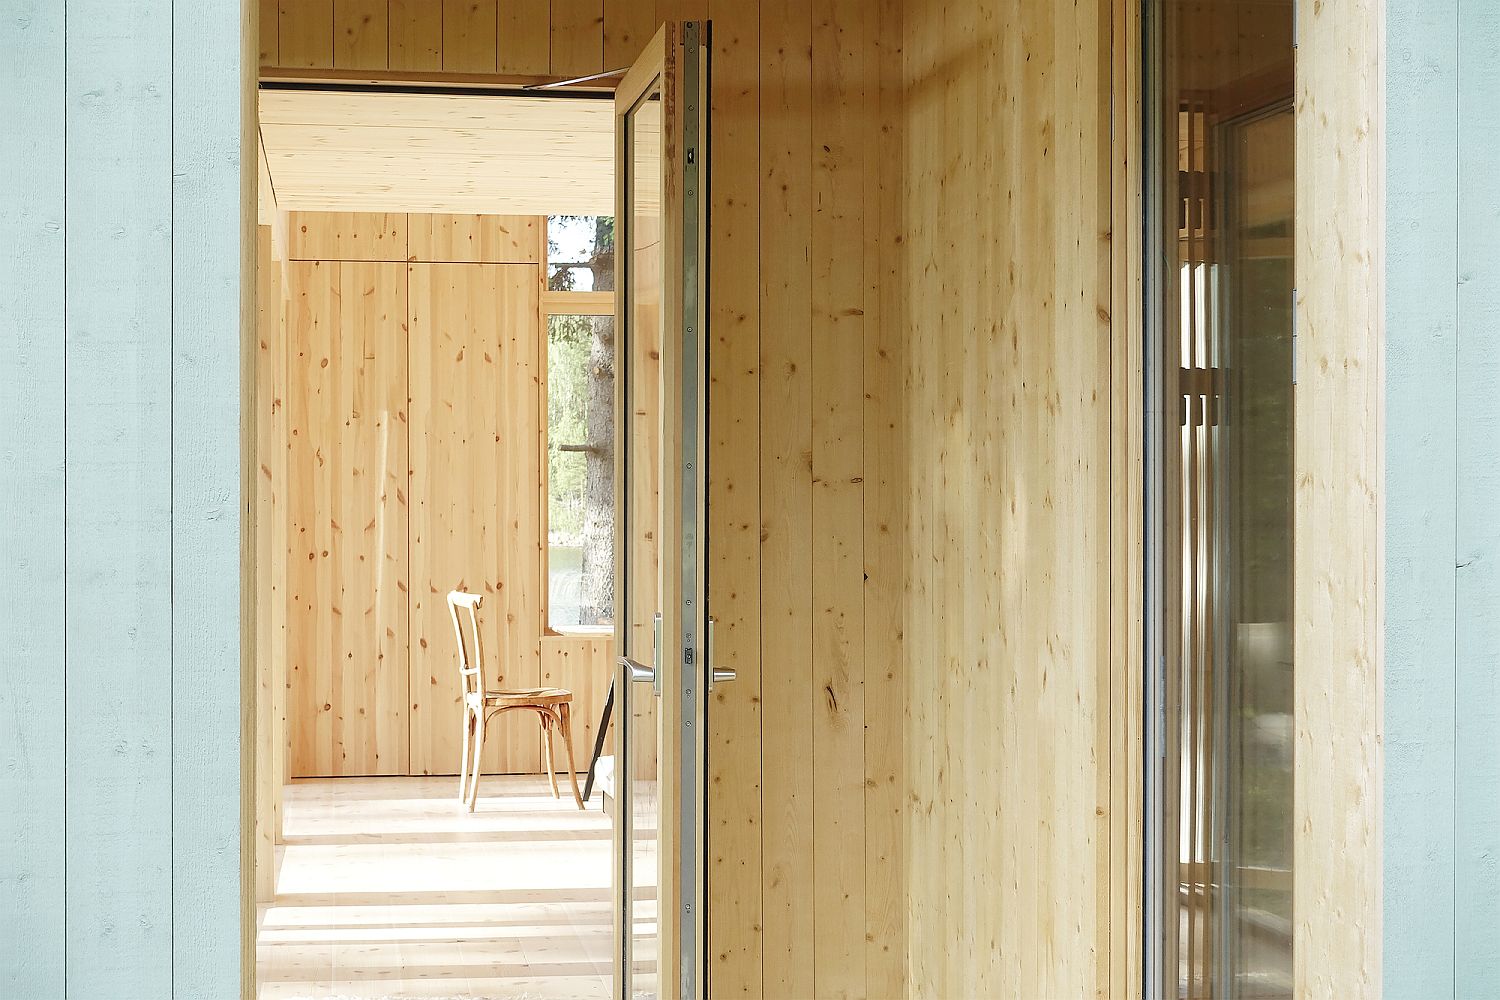 Unassuming minimal cabin design in wood with windows all around